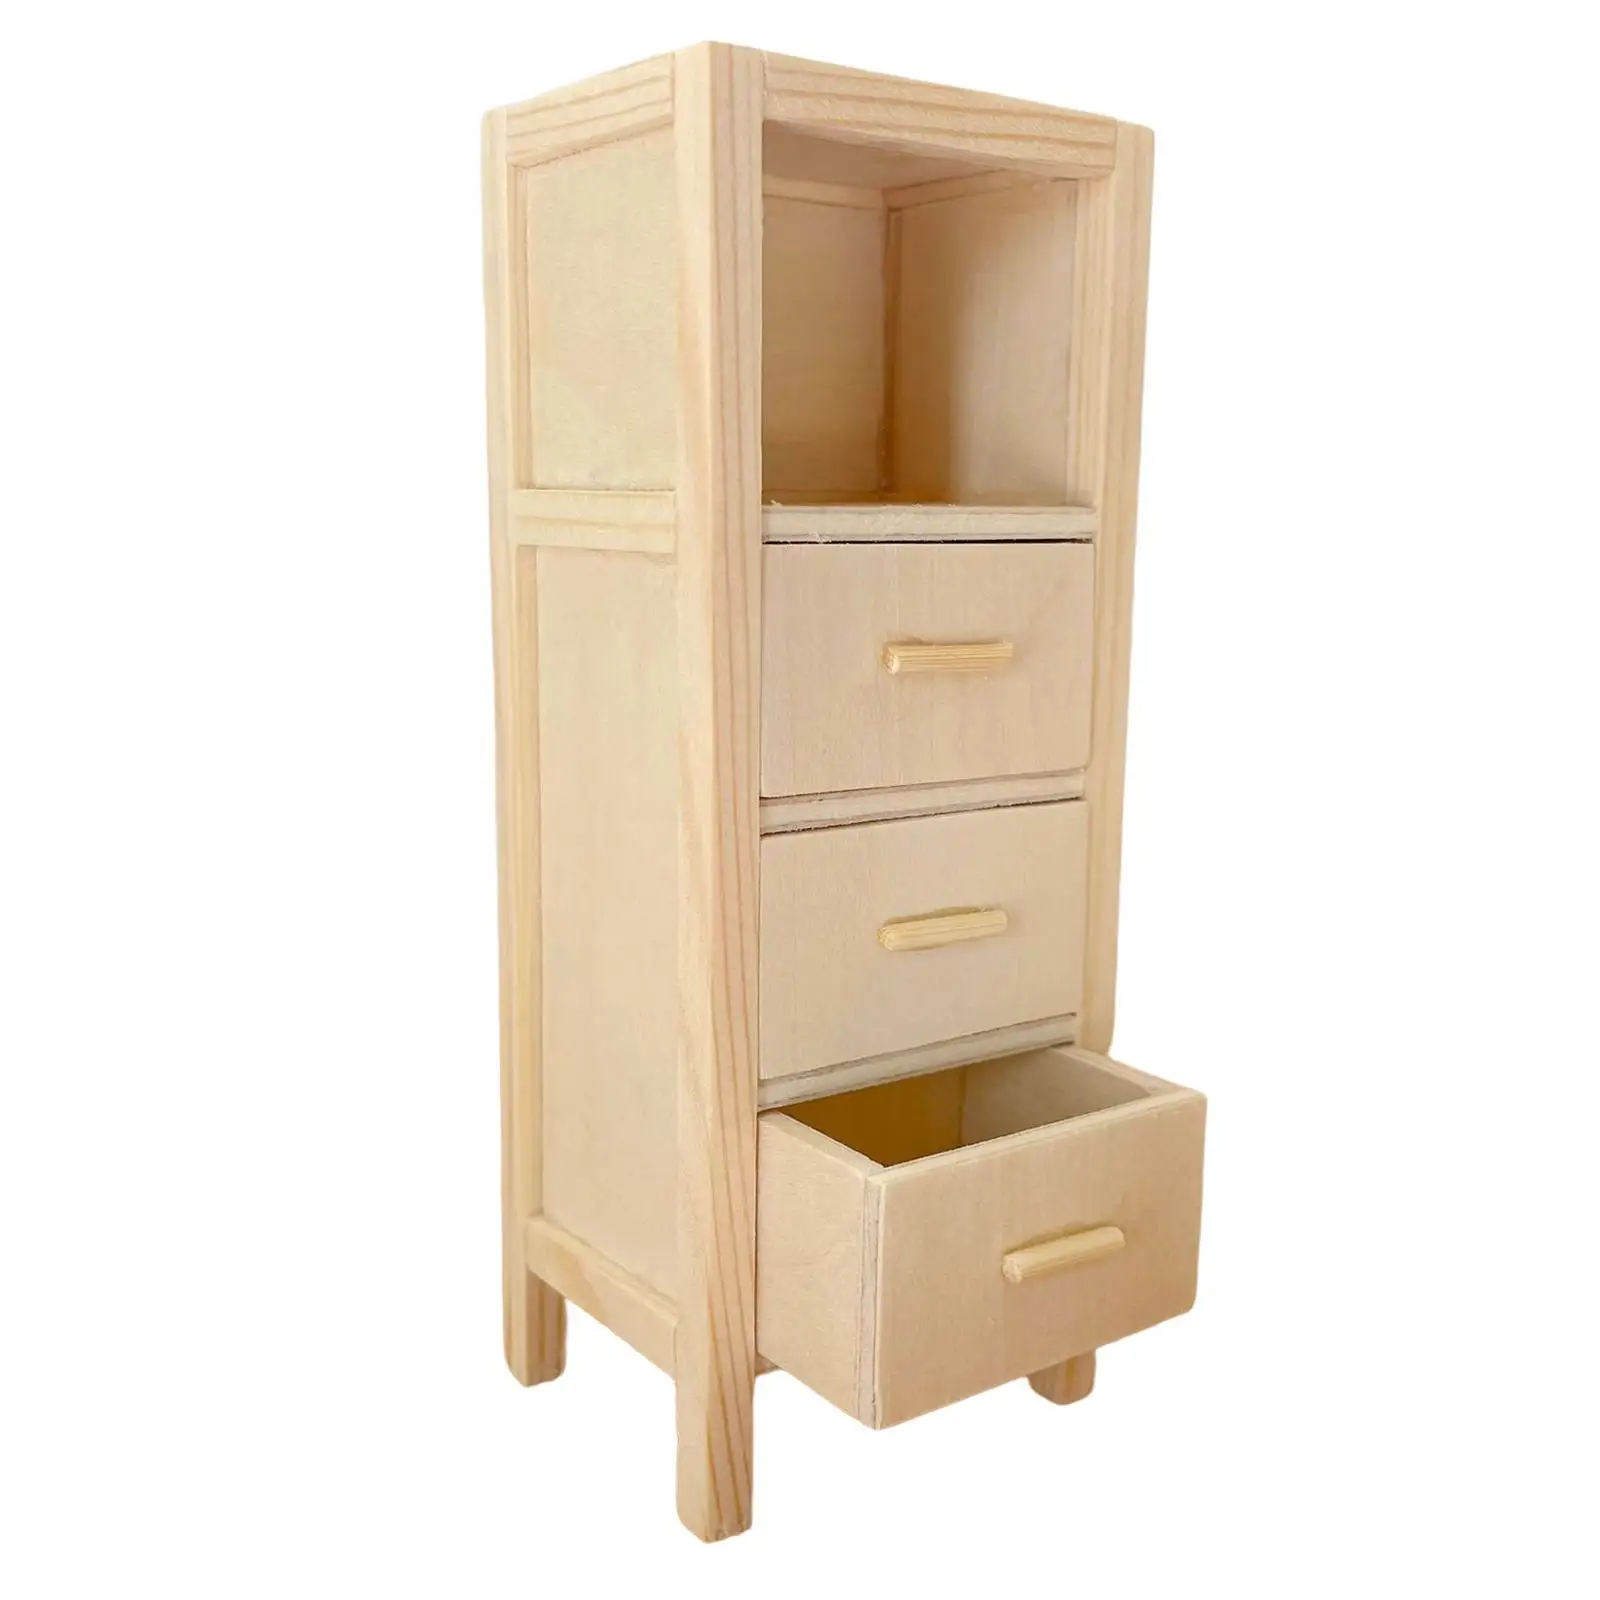 1/12 Scale Dollhouse Cabinet Furniture Display Cabinet Scenes Accessory